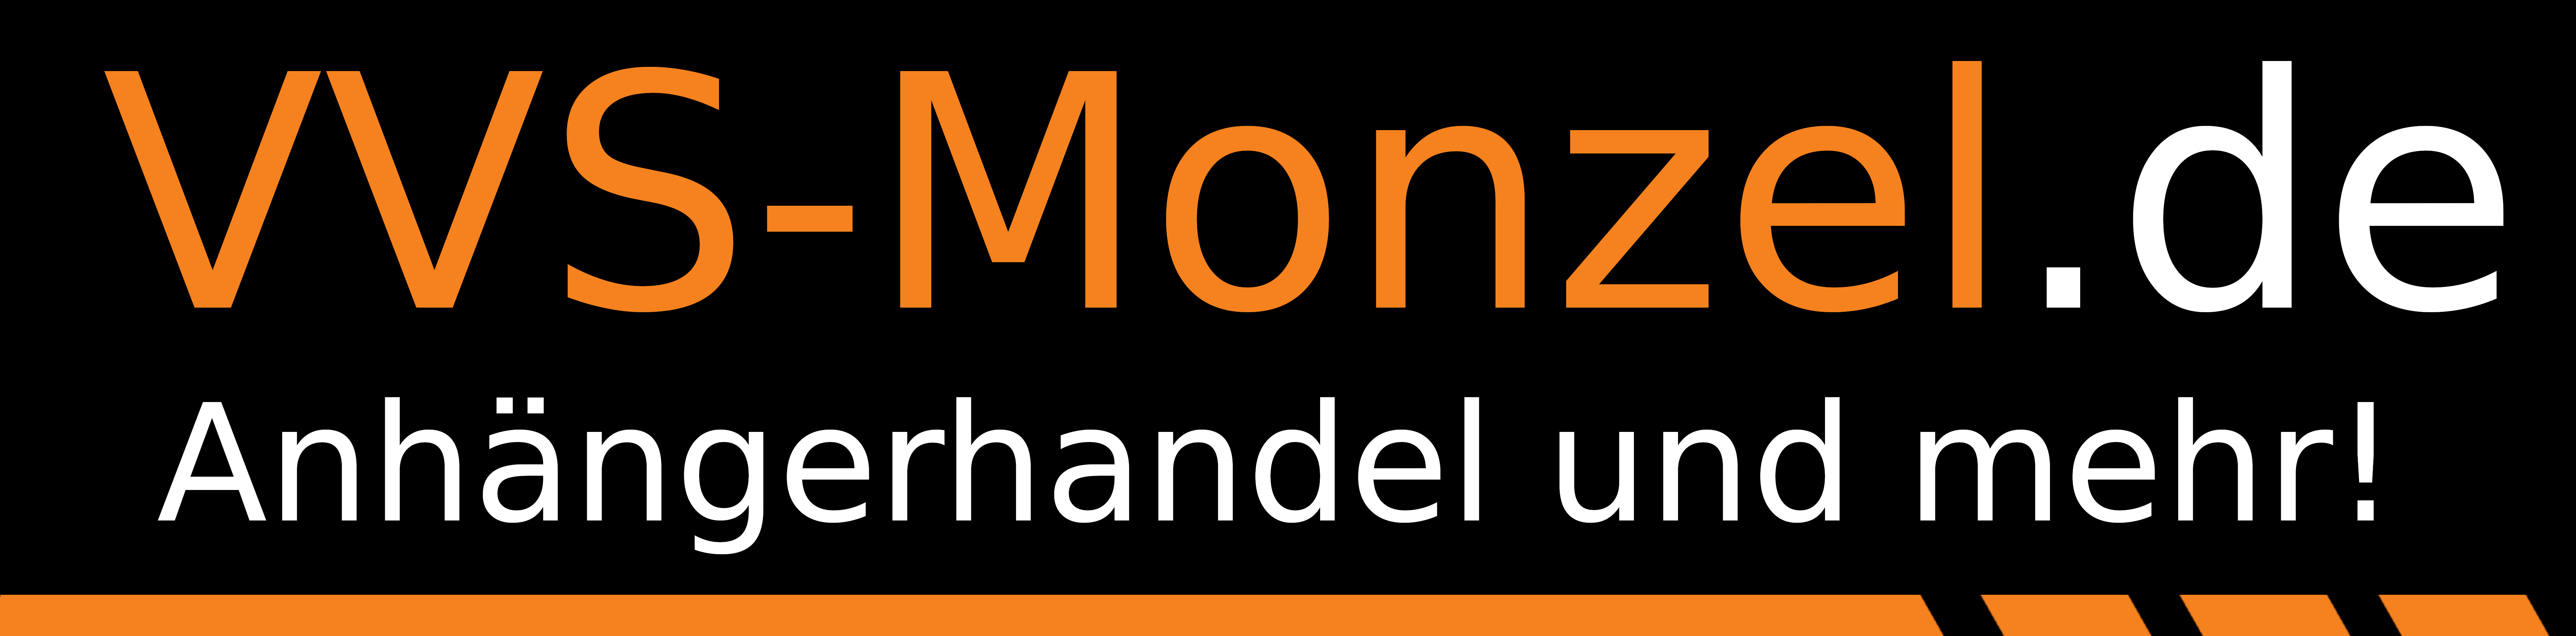 VVS-Monzel Mosel Trailer